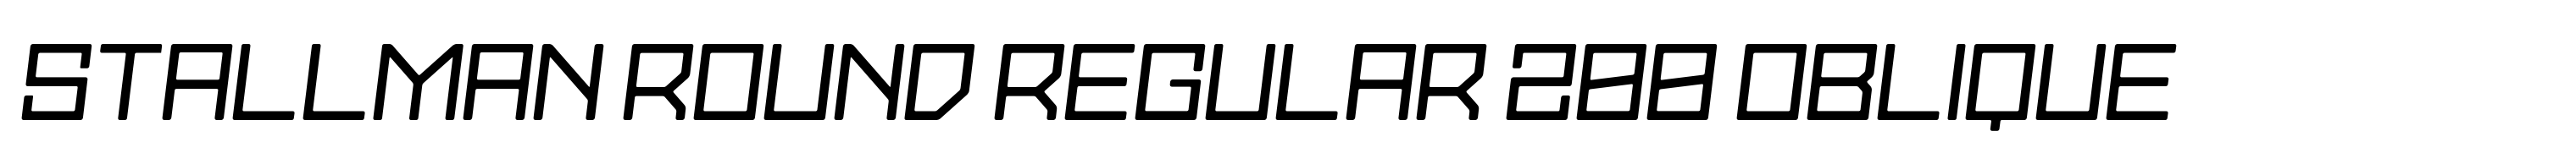 Stallman Round Regular 200 Oblique